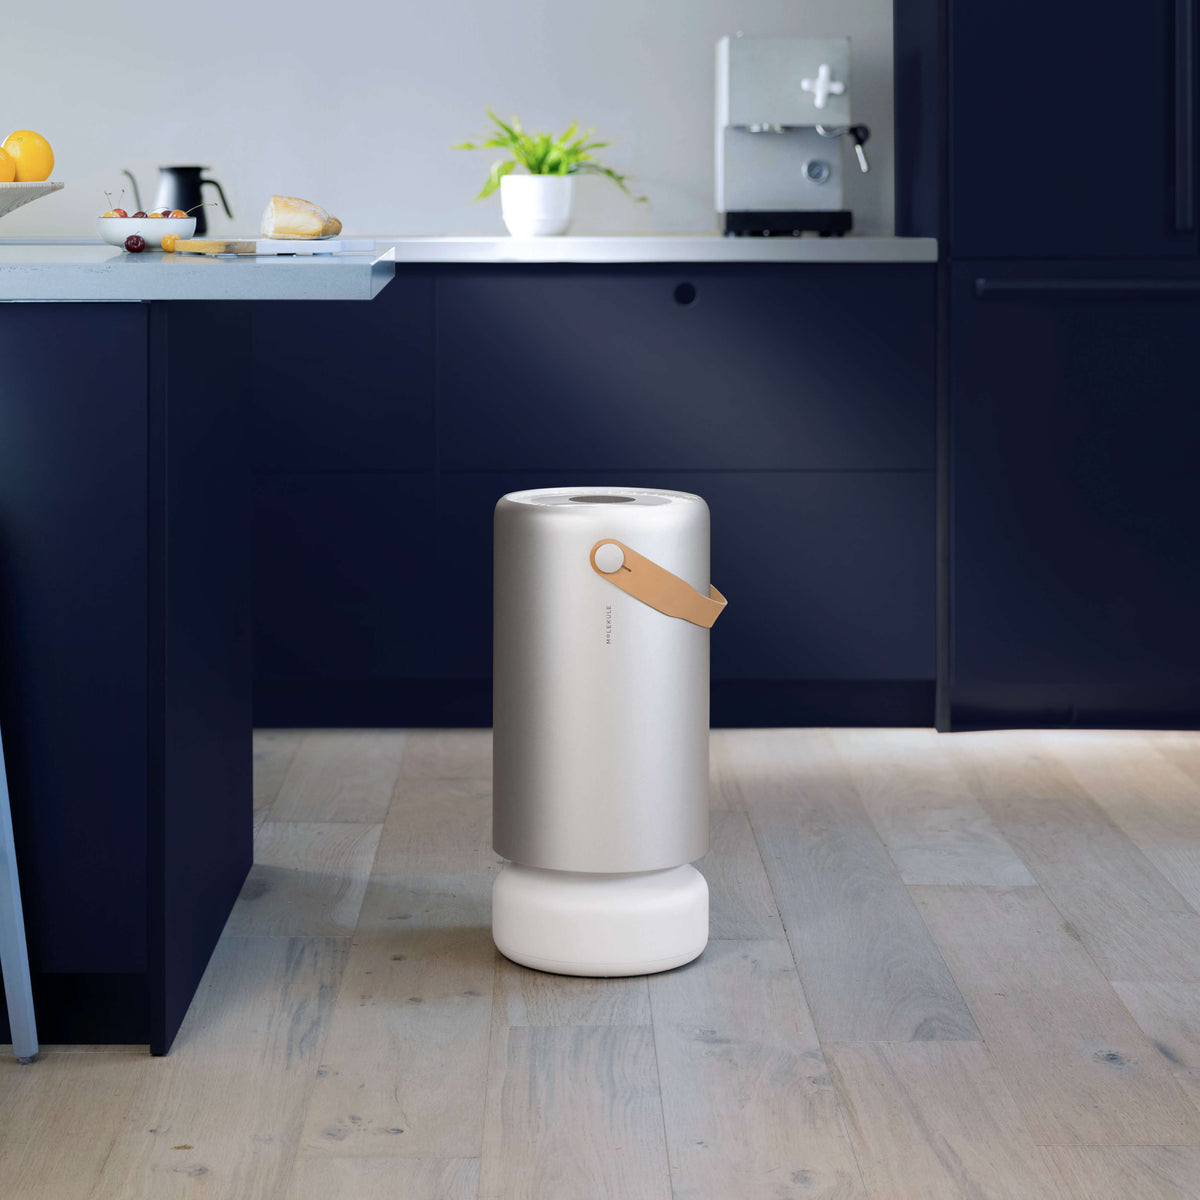 Air Pro air purifier in a modern kitchen